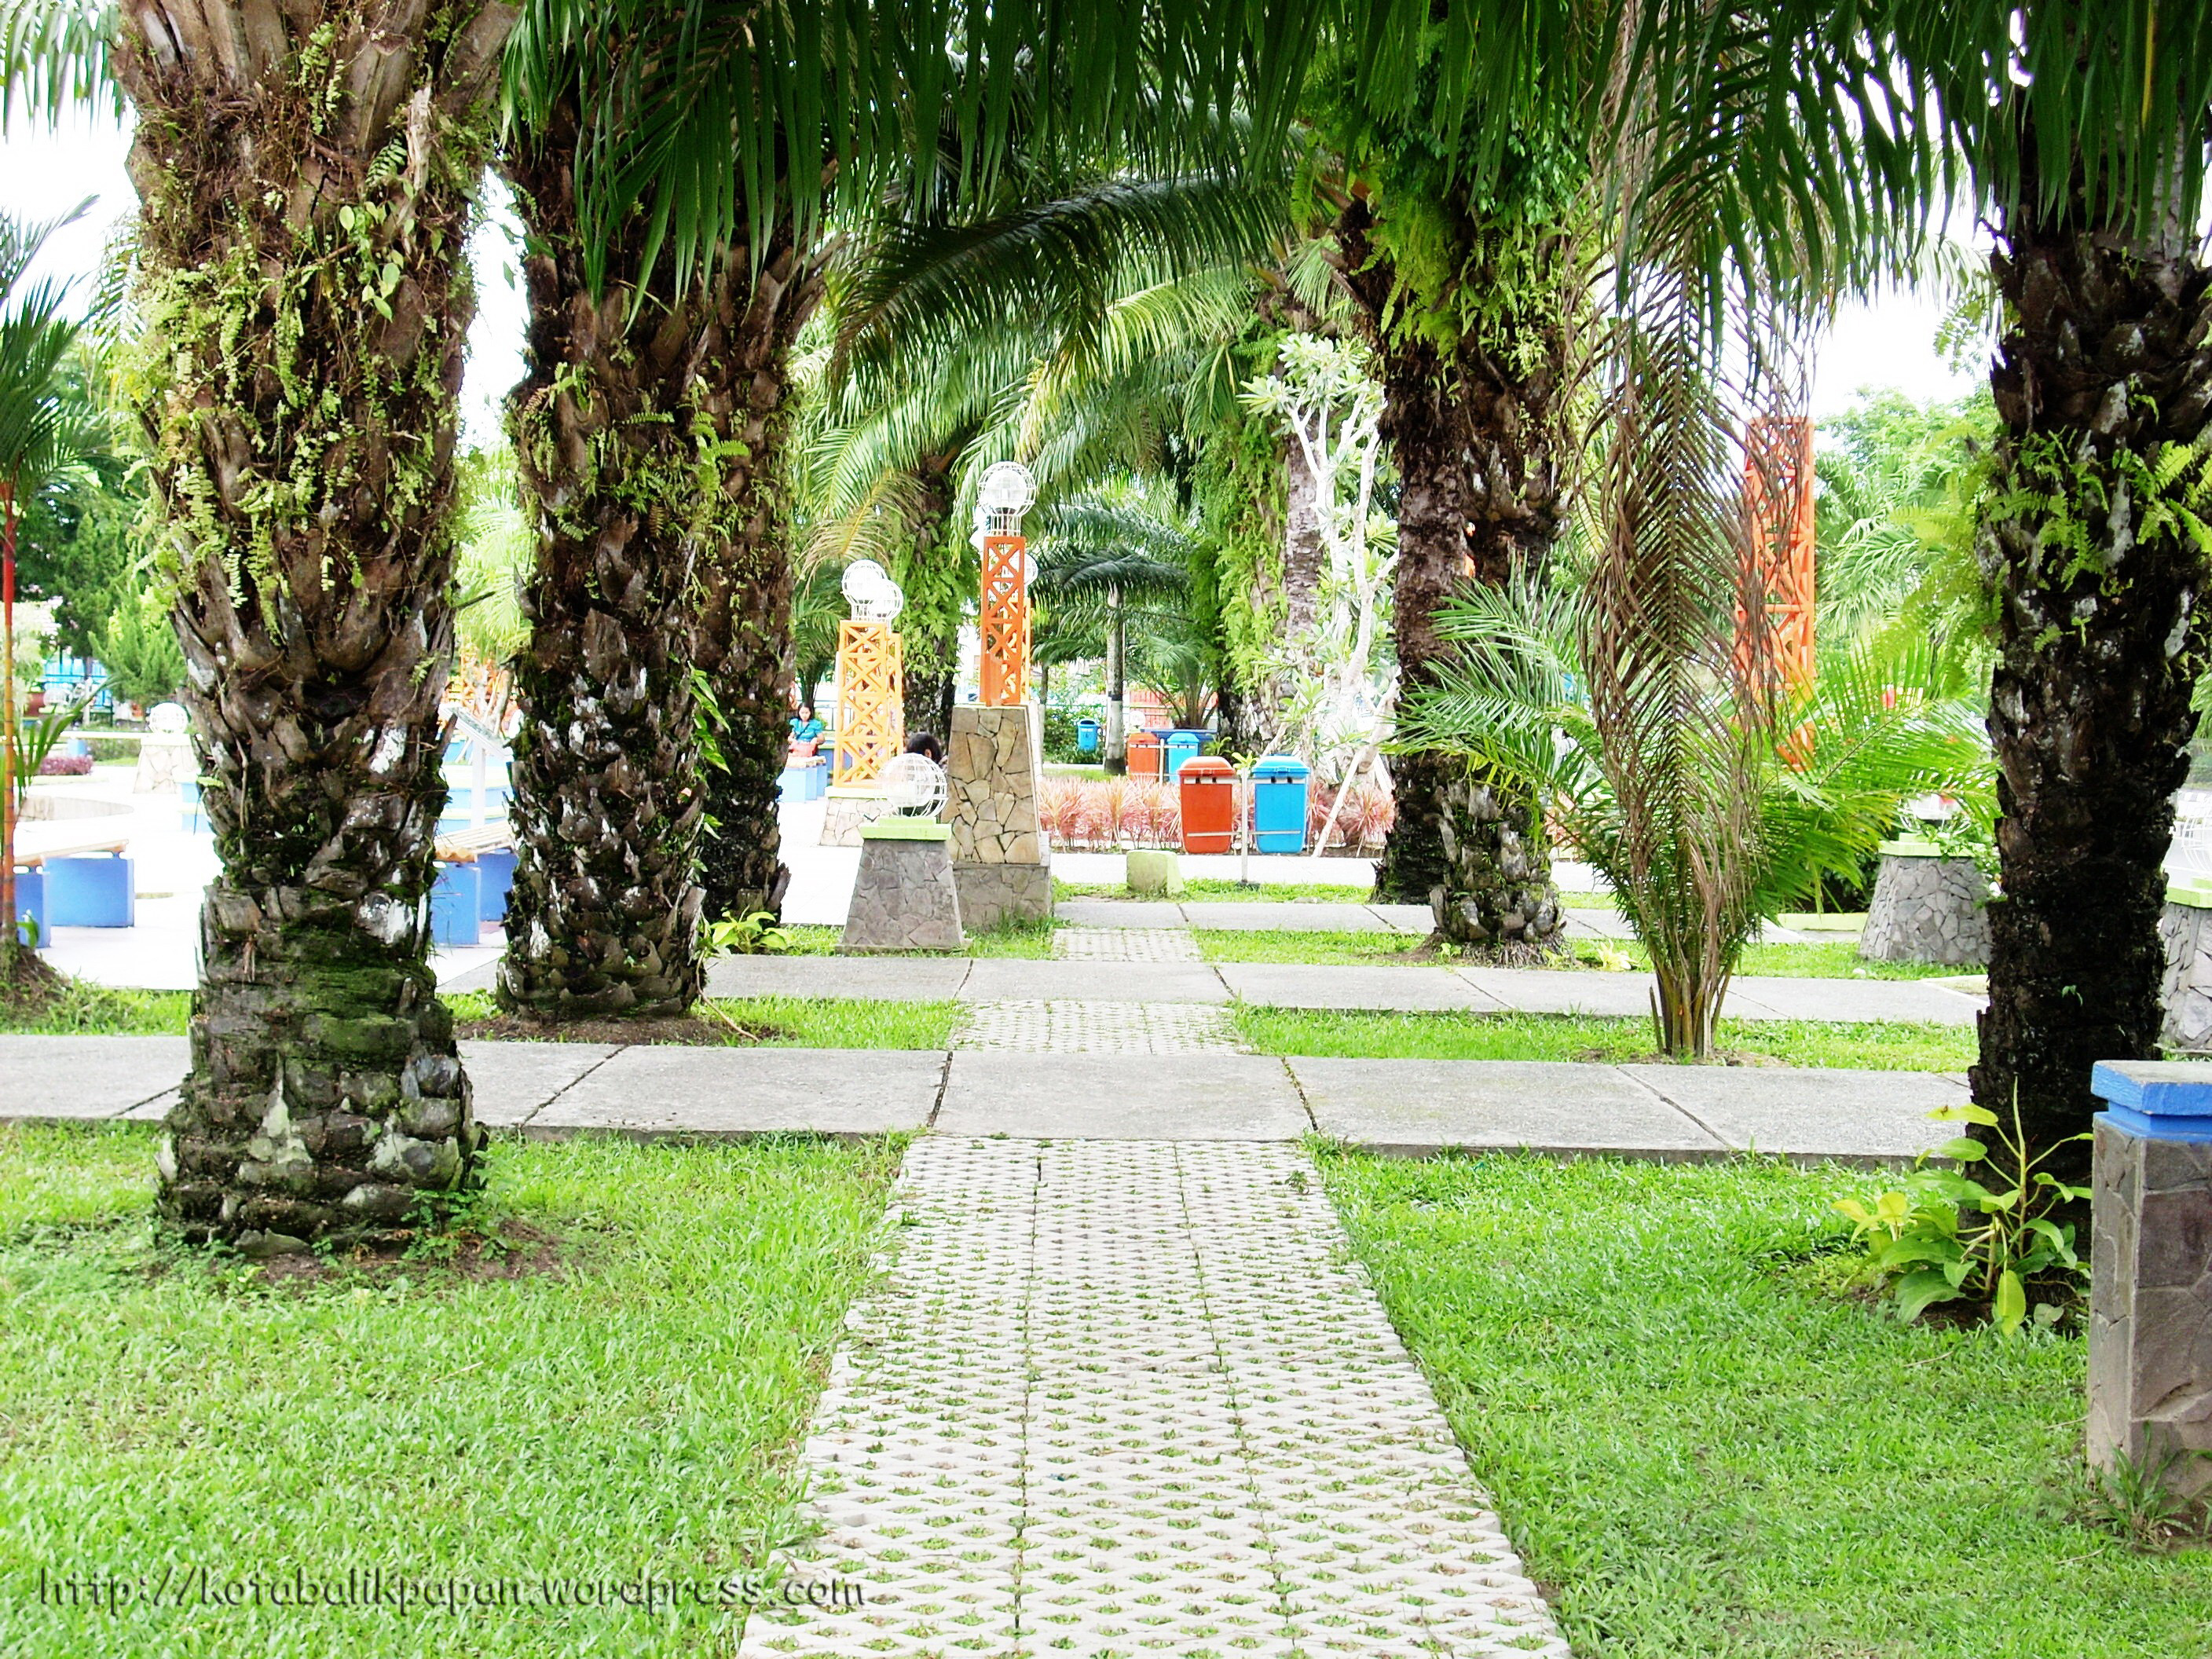 wallpaper taman,tree,property,palm tree,arecales,grass